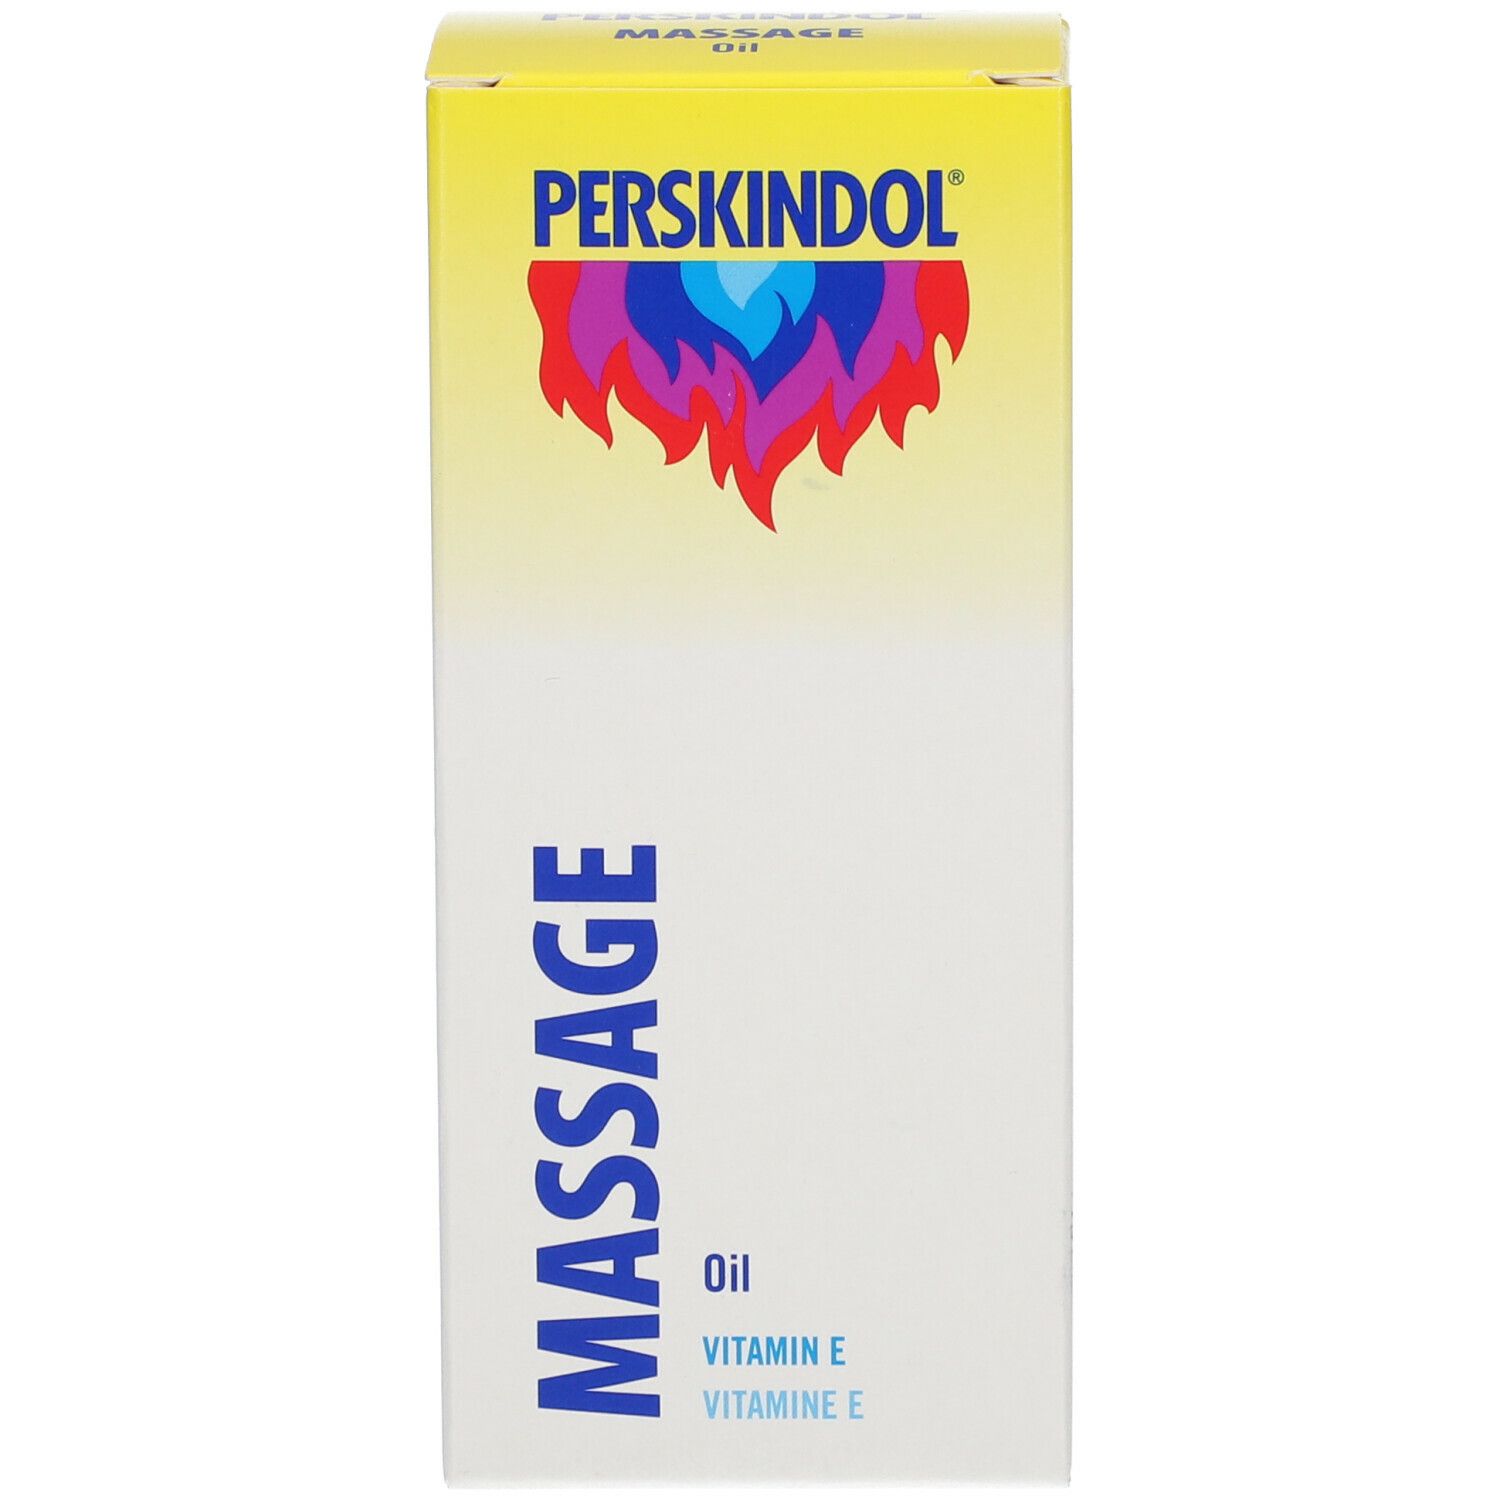 PERSKINDOL Massage Oil